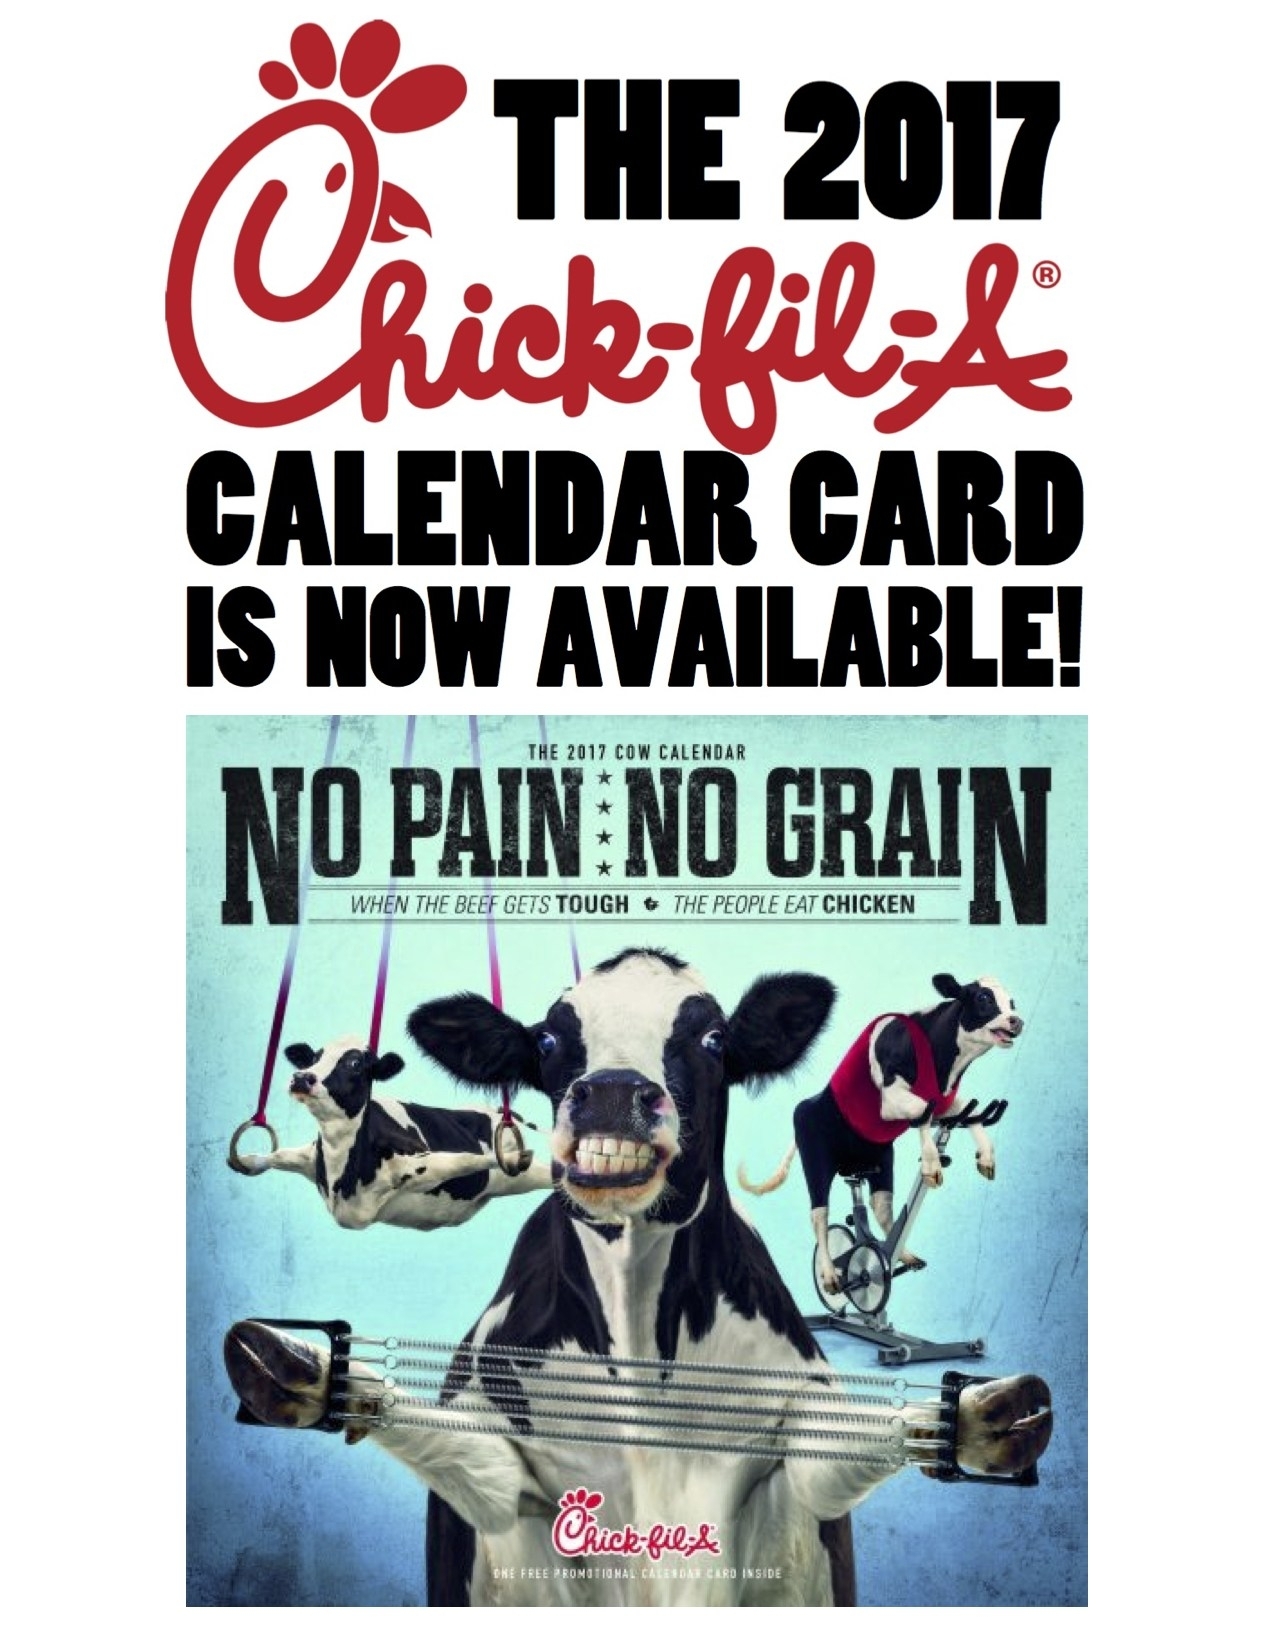 Take Chick Fil A Calendar